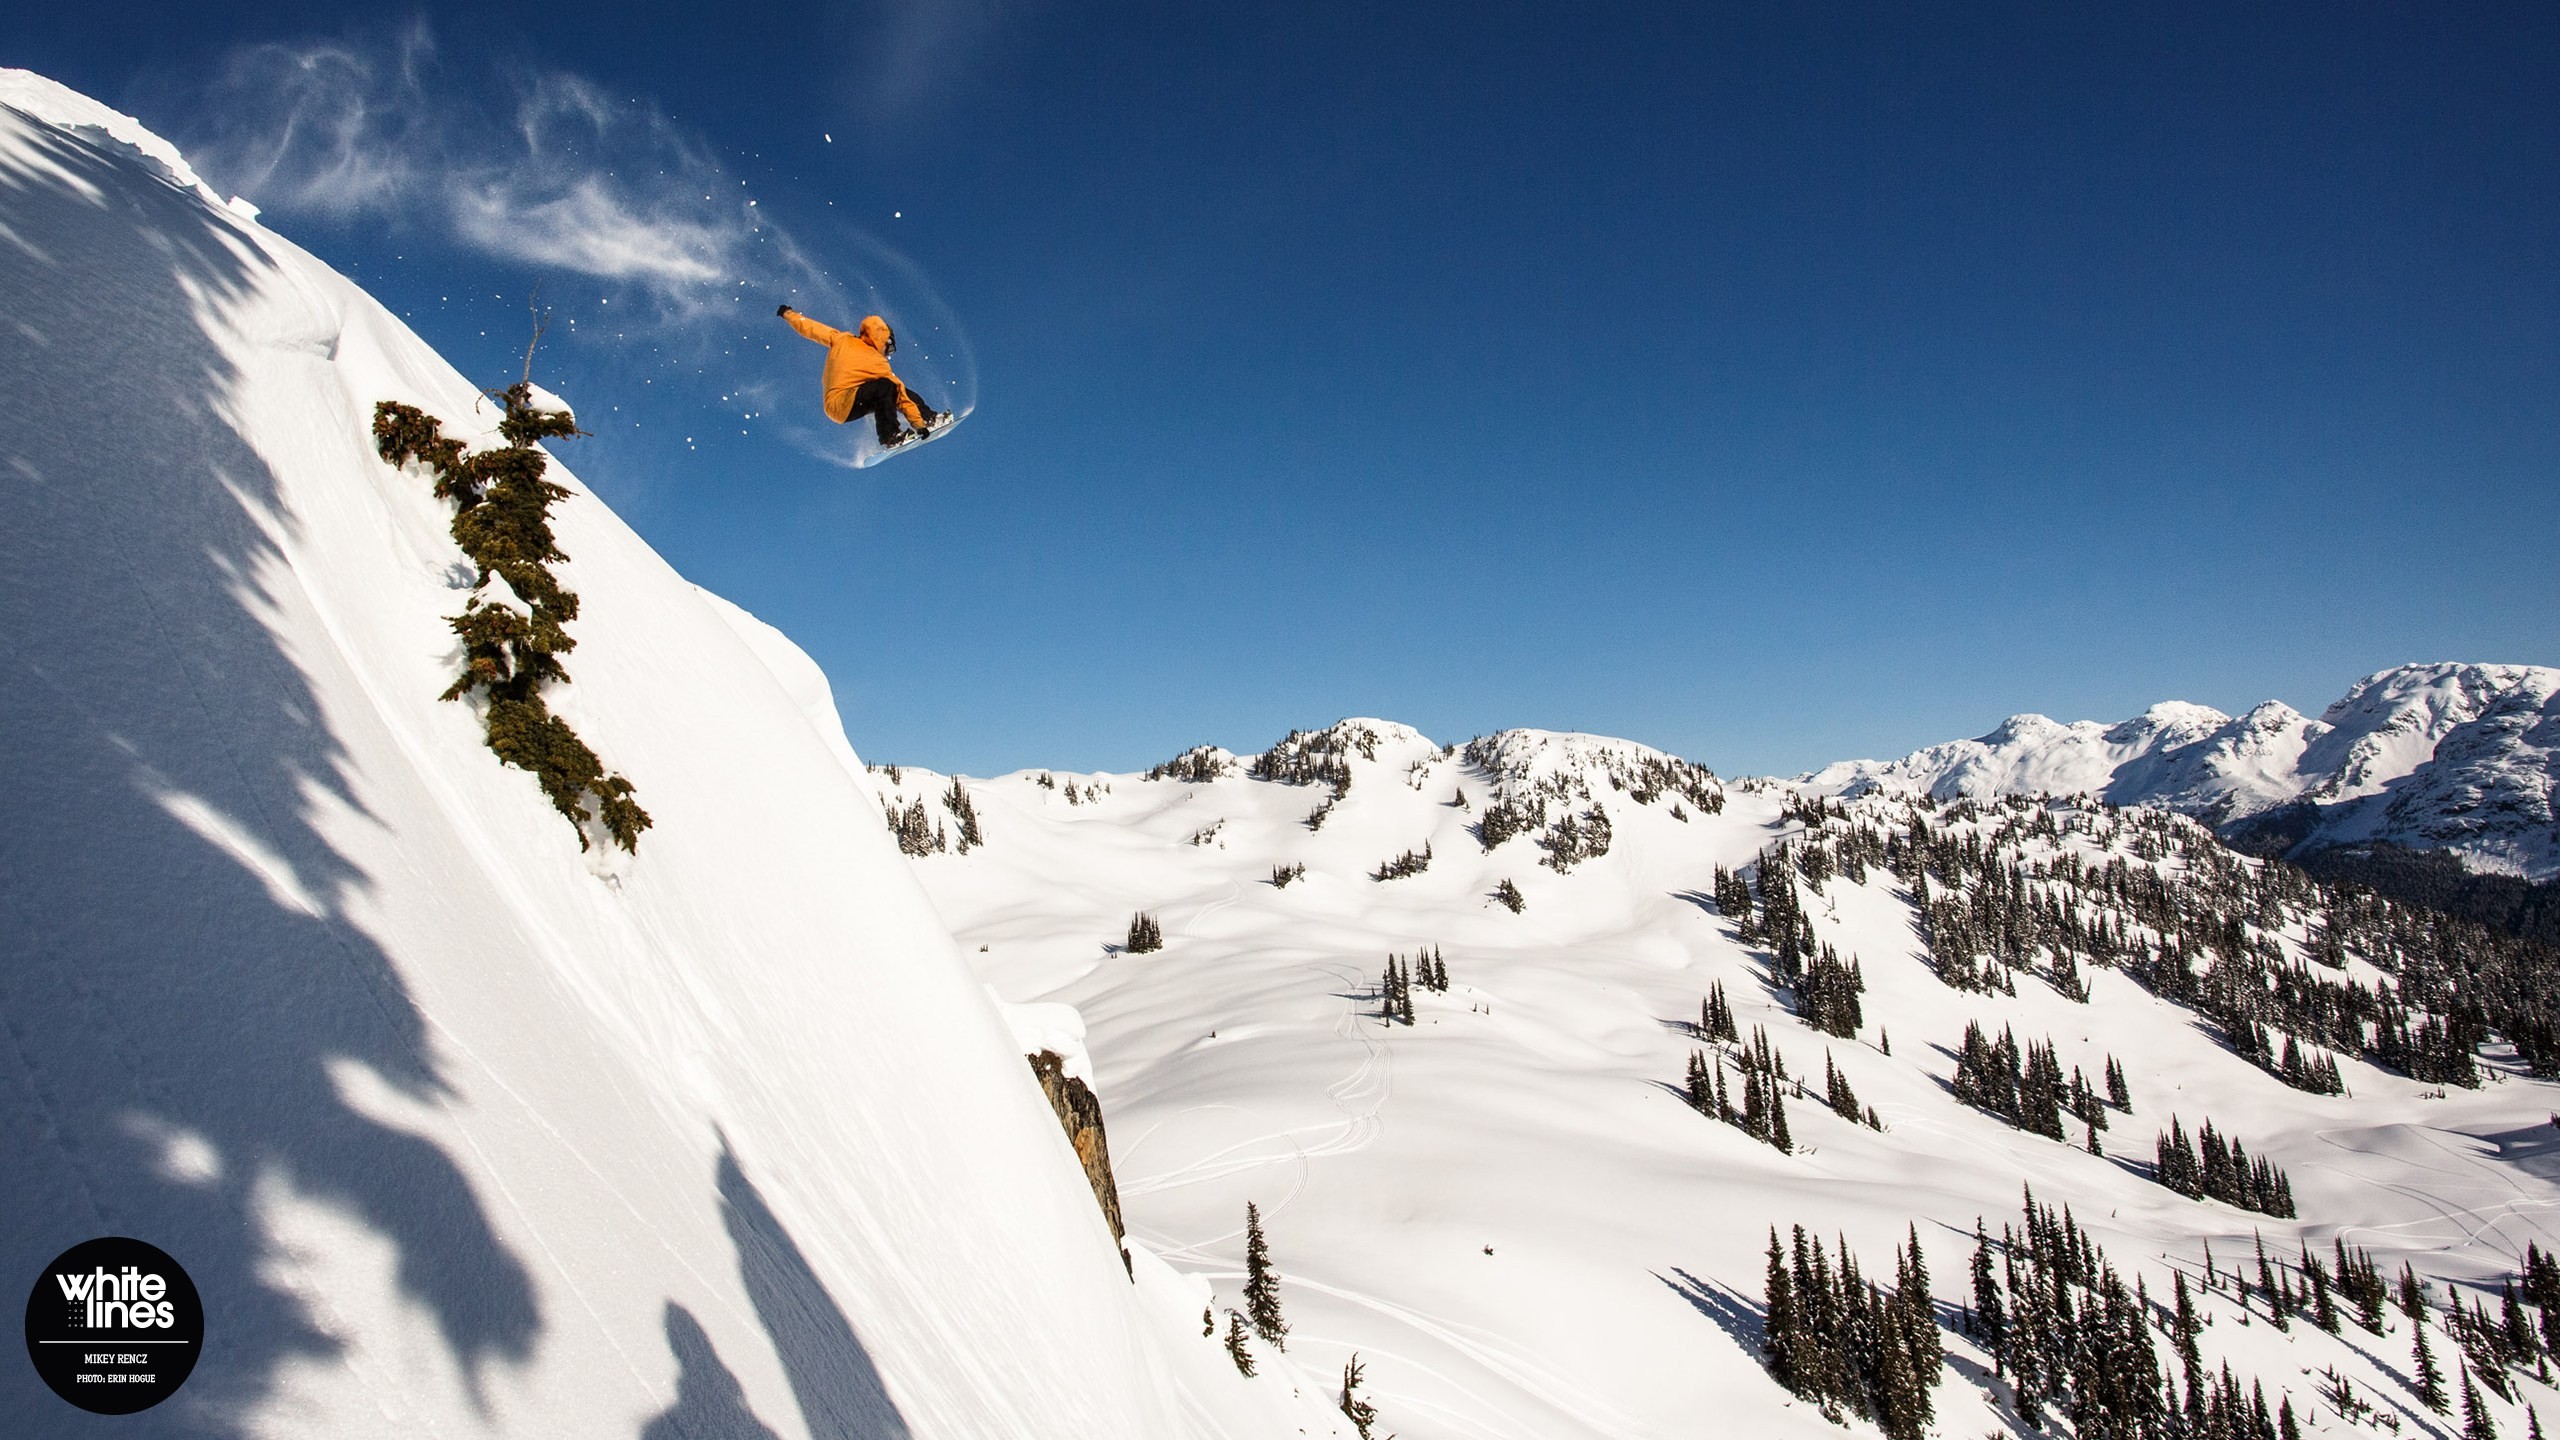 2560x1440 Snowboard Wallpaper Mickey Rencz S Leap Of Fa